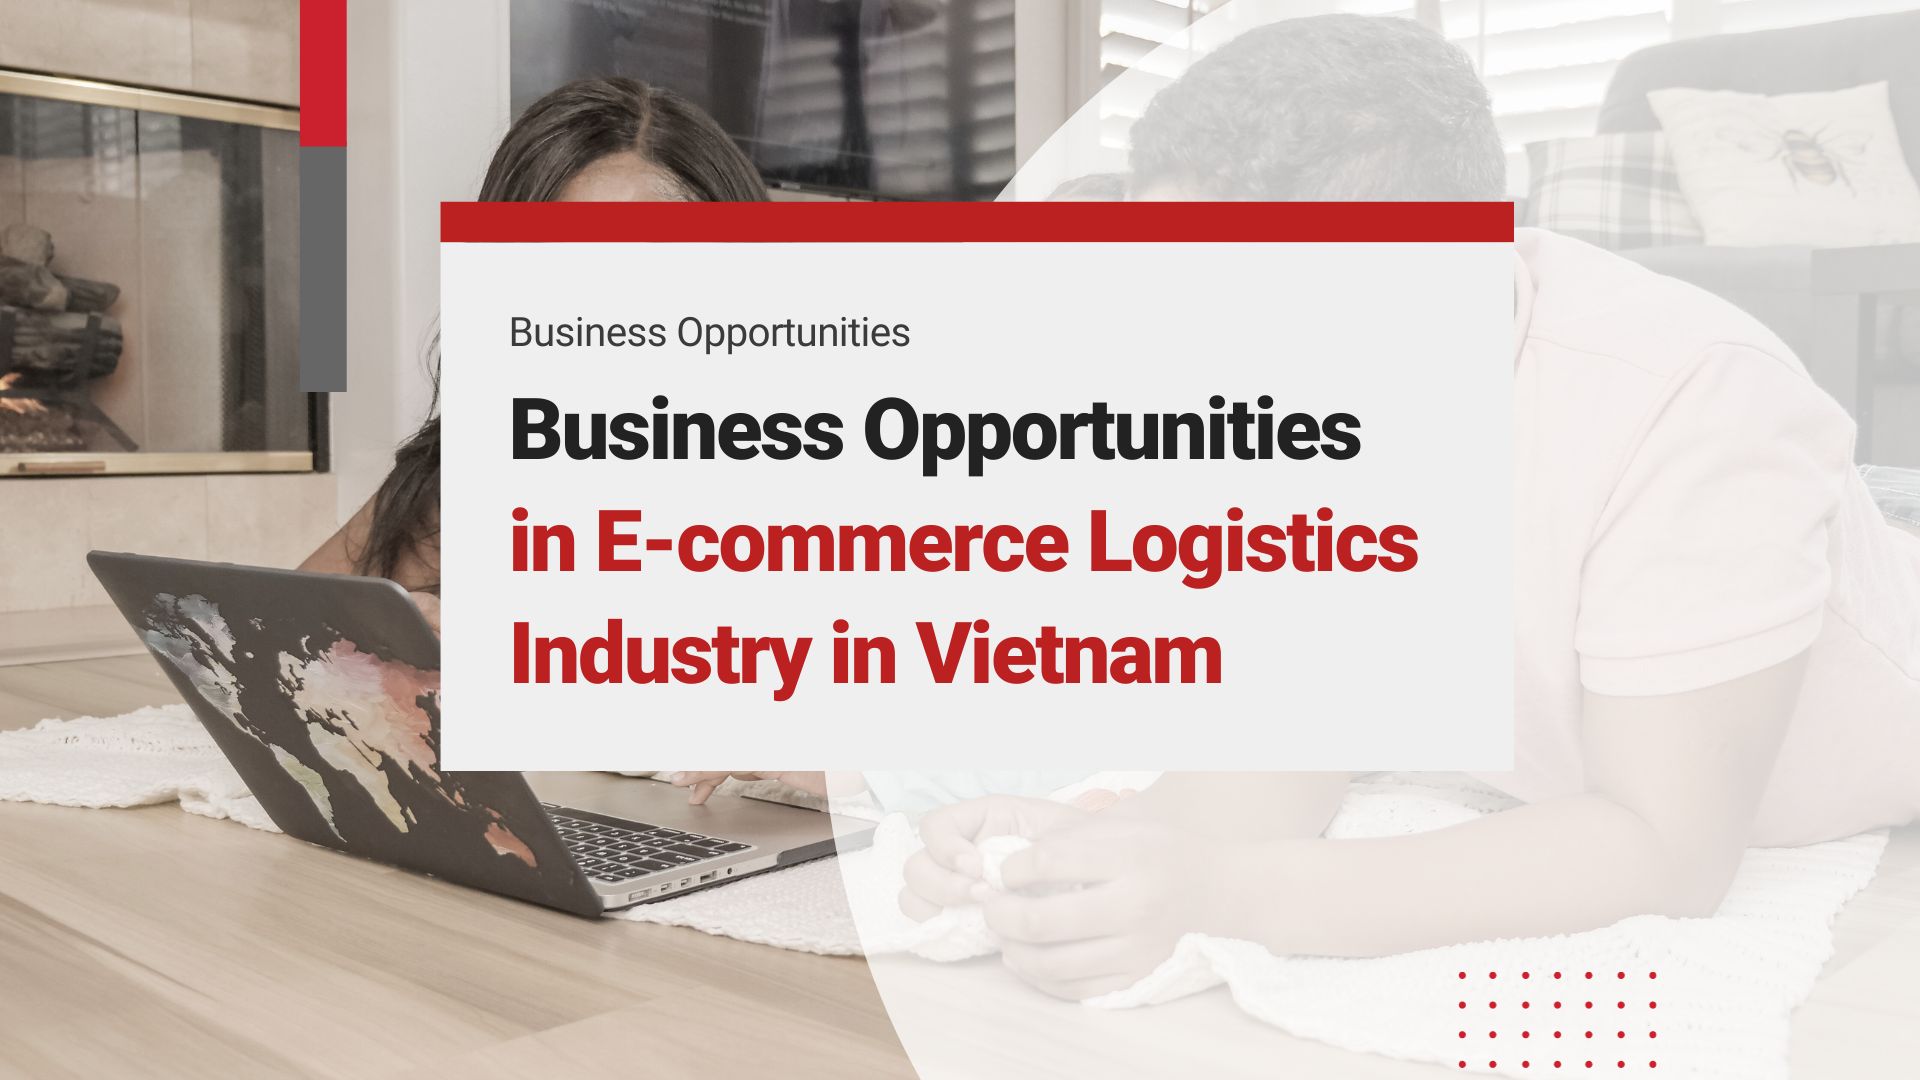 E-commerce Logistics Industry in Vietnam